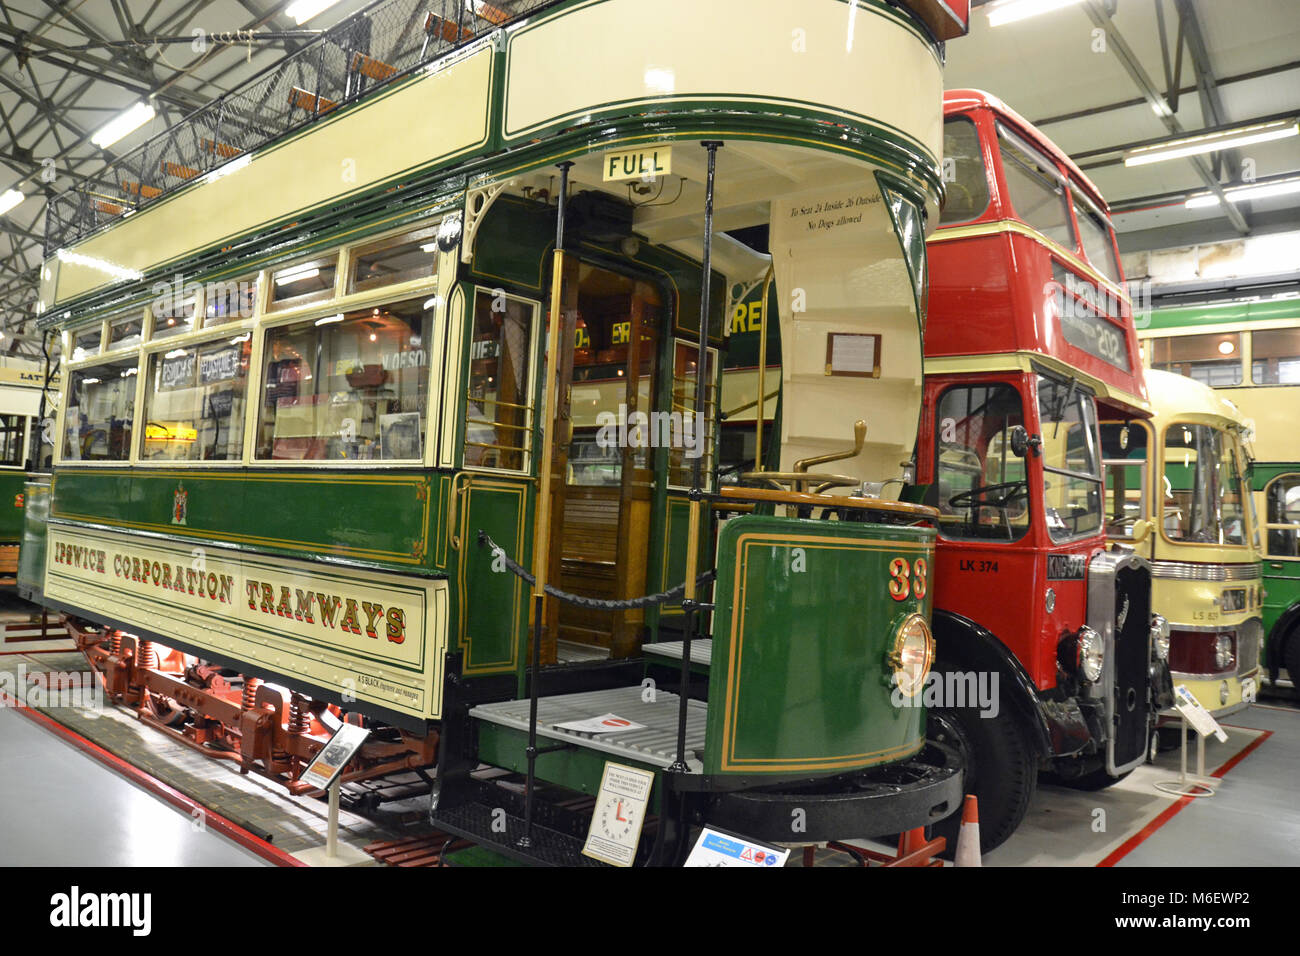 No. 33 Tram from Ipswich Corporation Tramways. Ipswich Transport Museum, Suffolk, England. Stock Photo